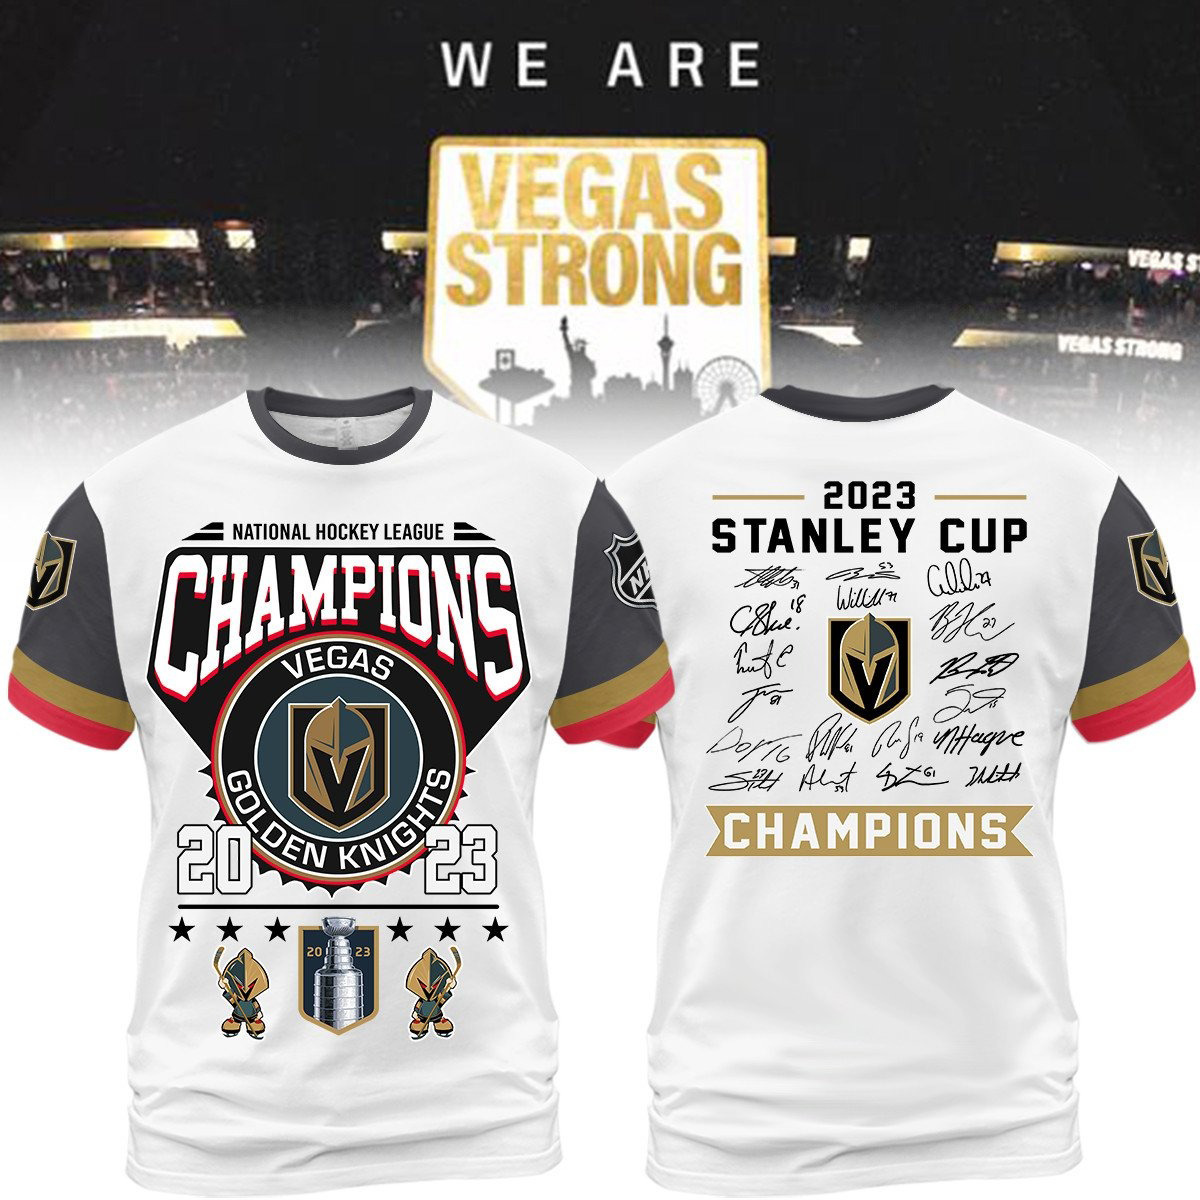 2023 Stanley Cup Champions Vegas Golden Knights NHL Team Black Gold Design  Hoodie T Shirt - Growkoc